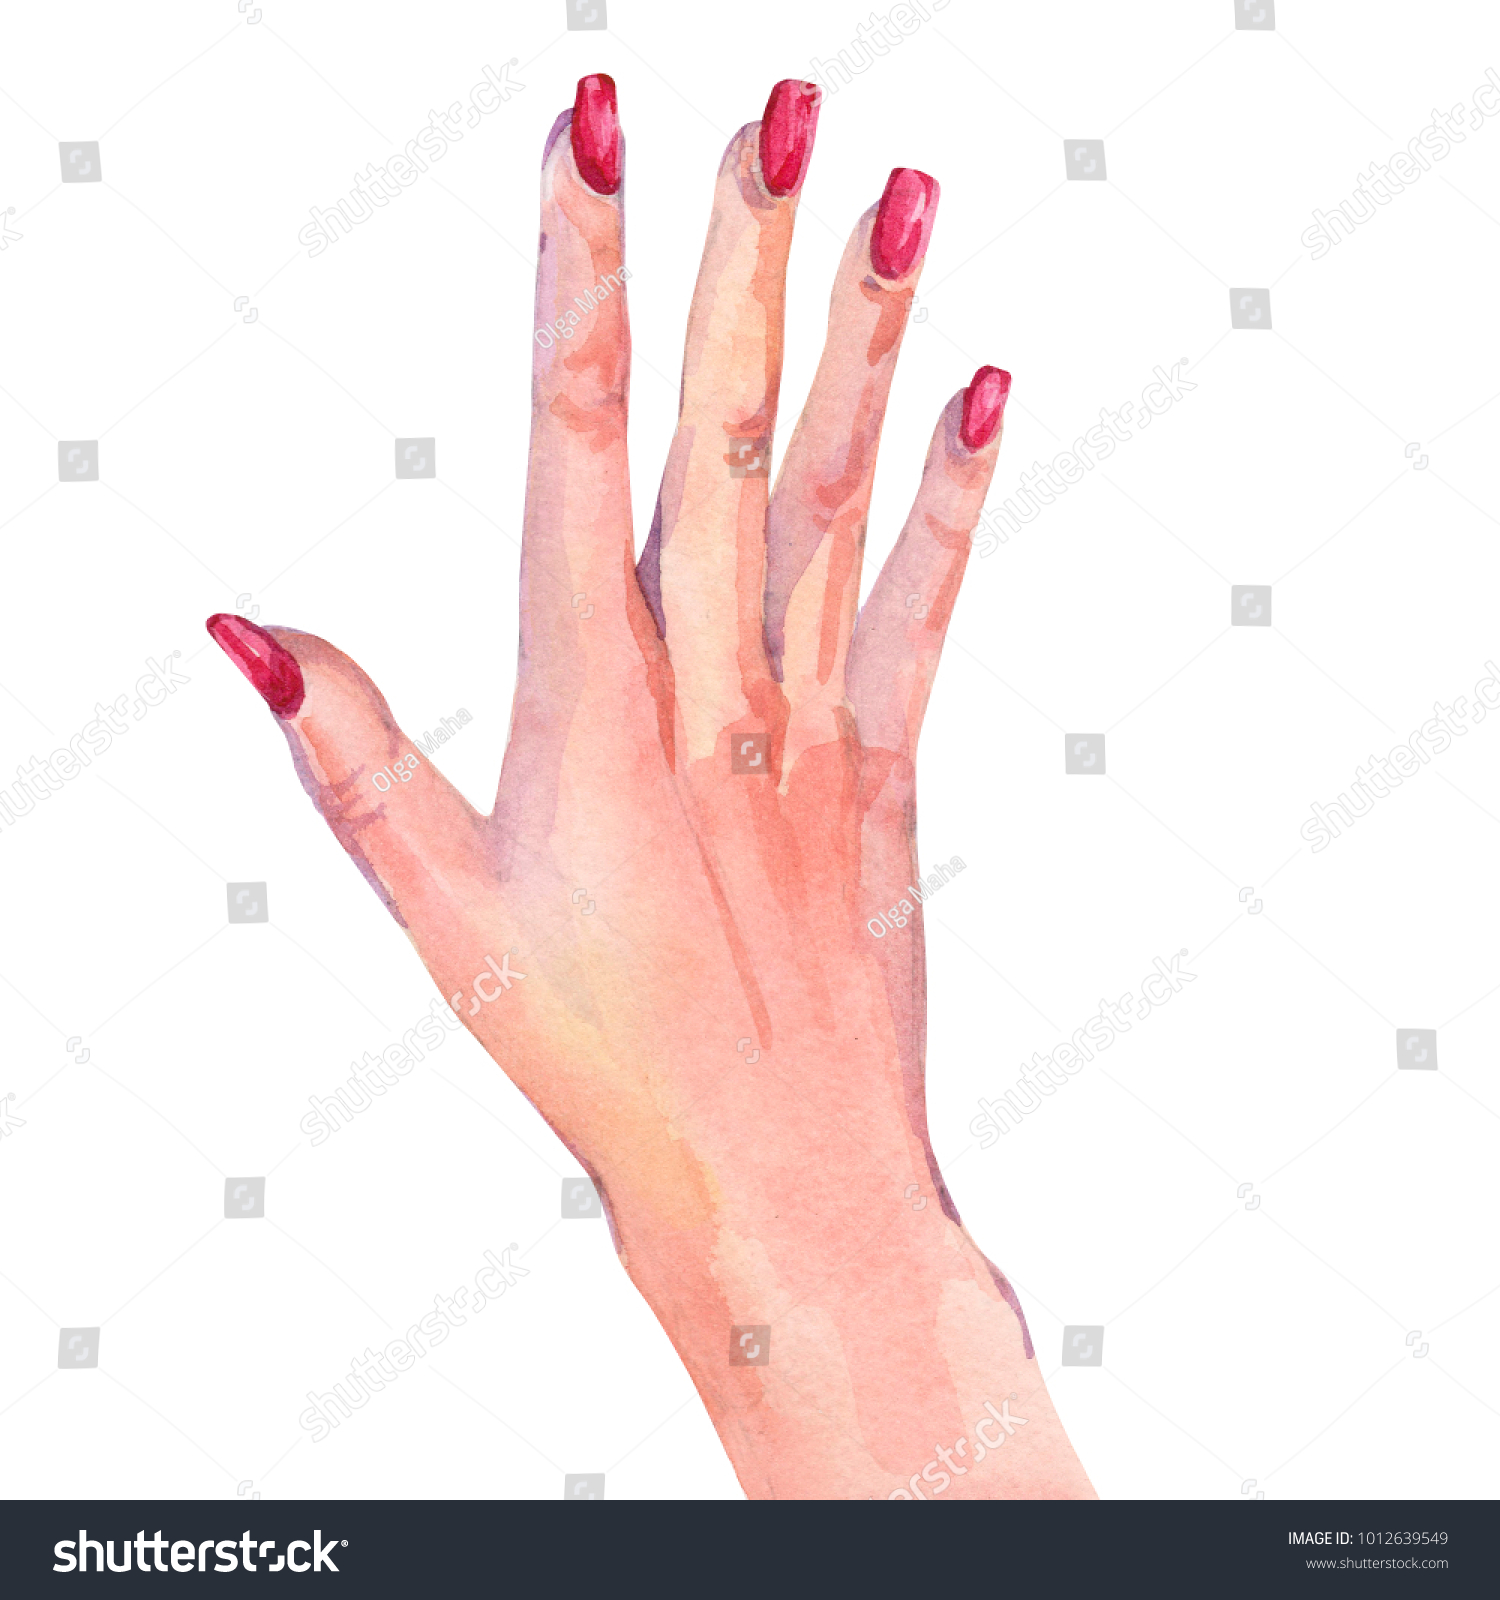 Woman hand photo